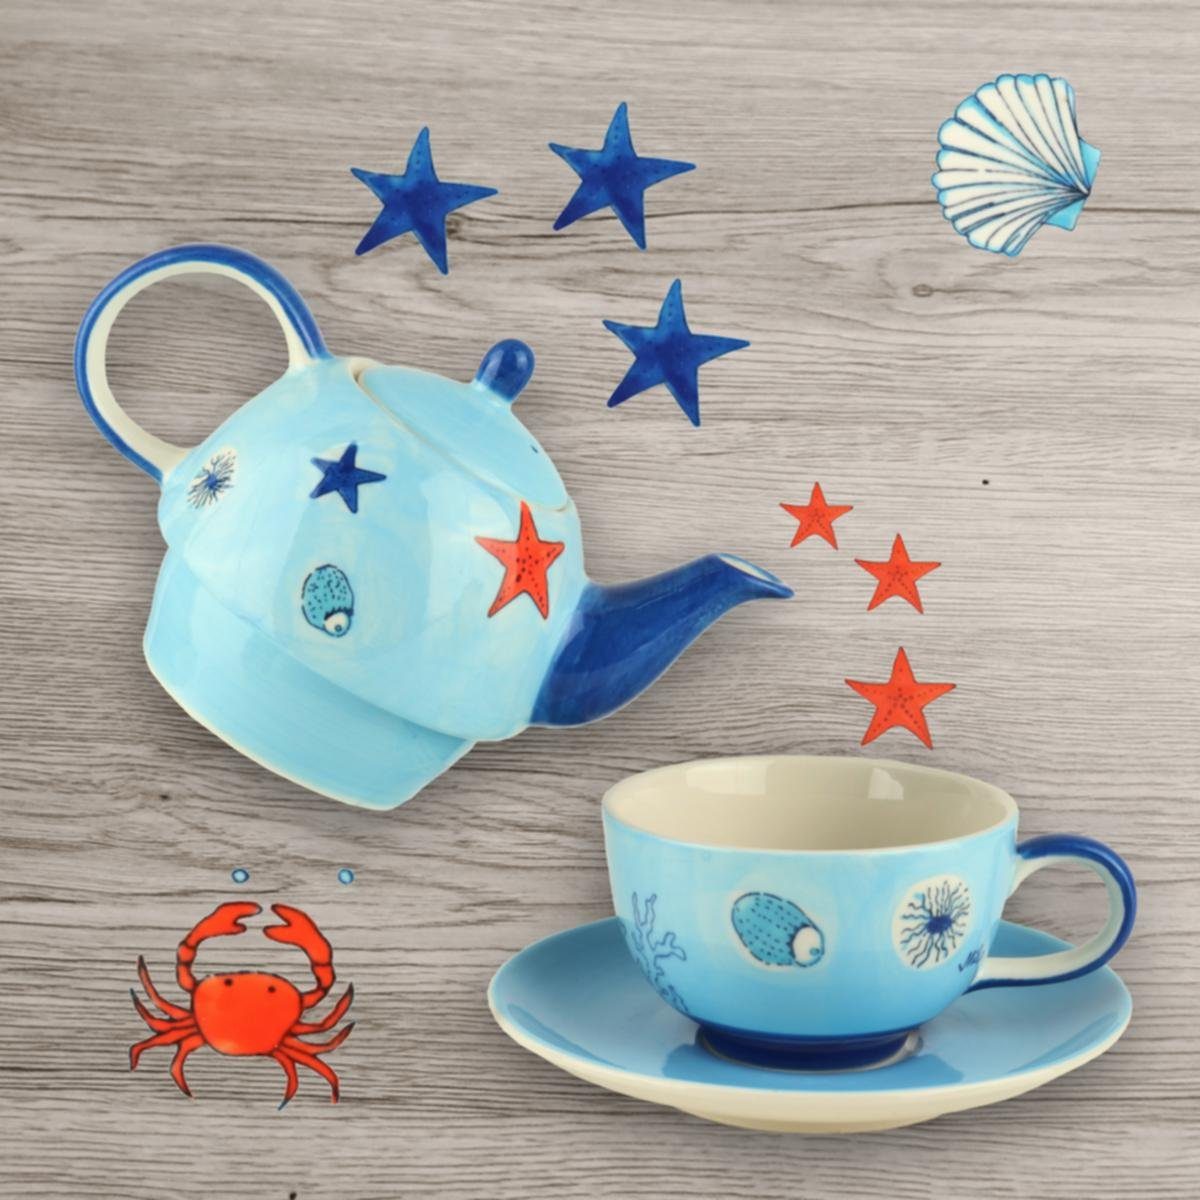 Mila Teekanne Mila Keramik Ocean, (Set) l, the Save Tea One 0.4 Tee-Set for